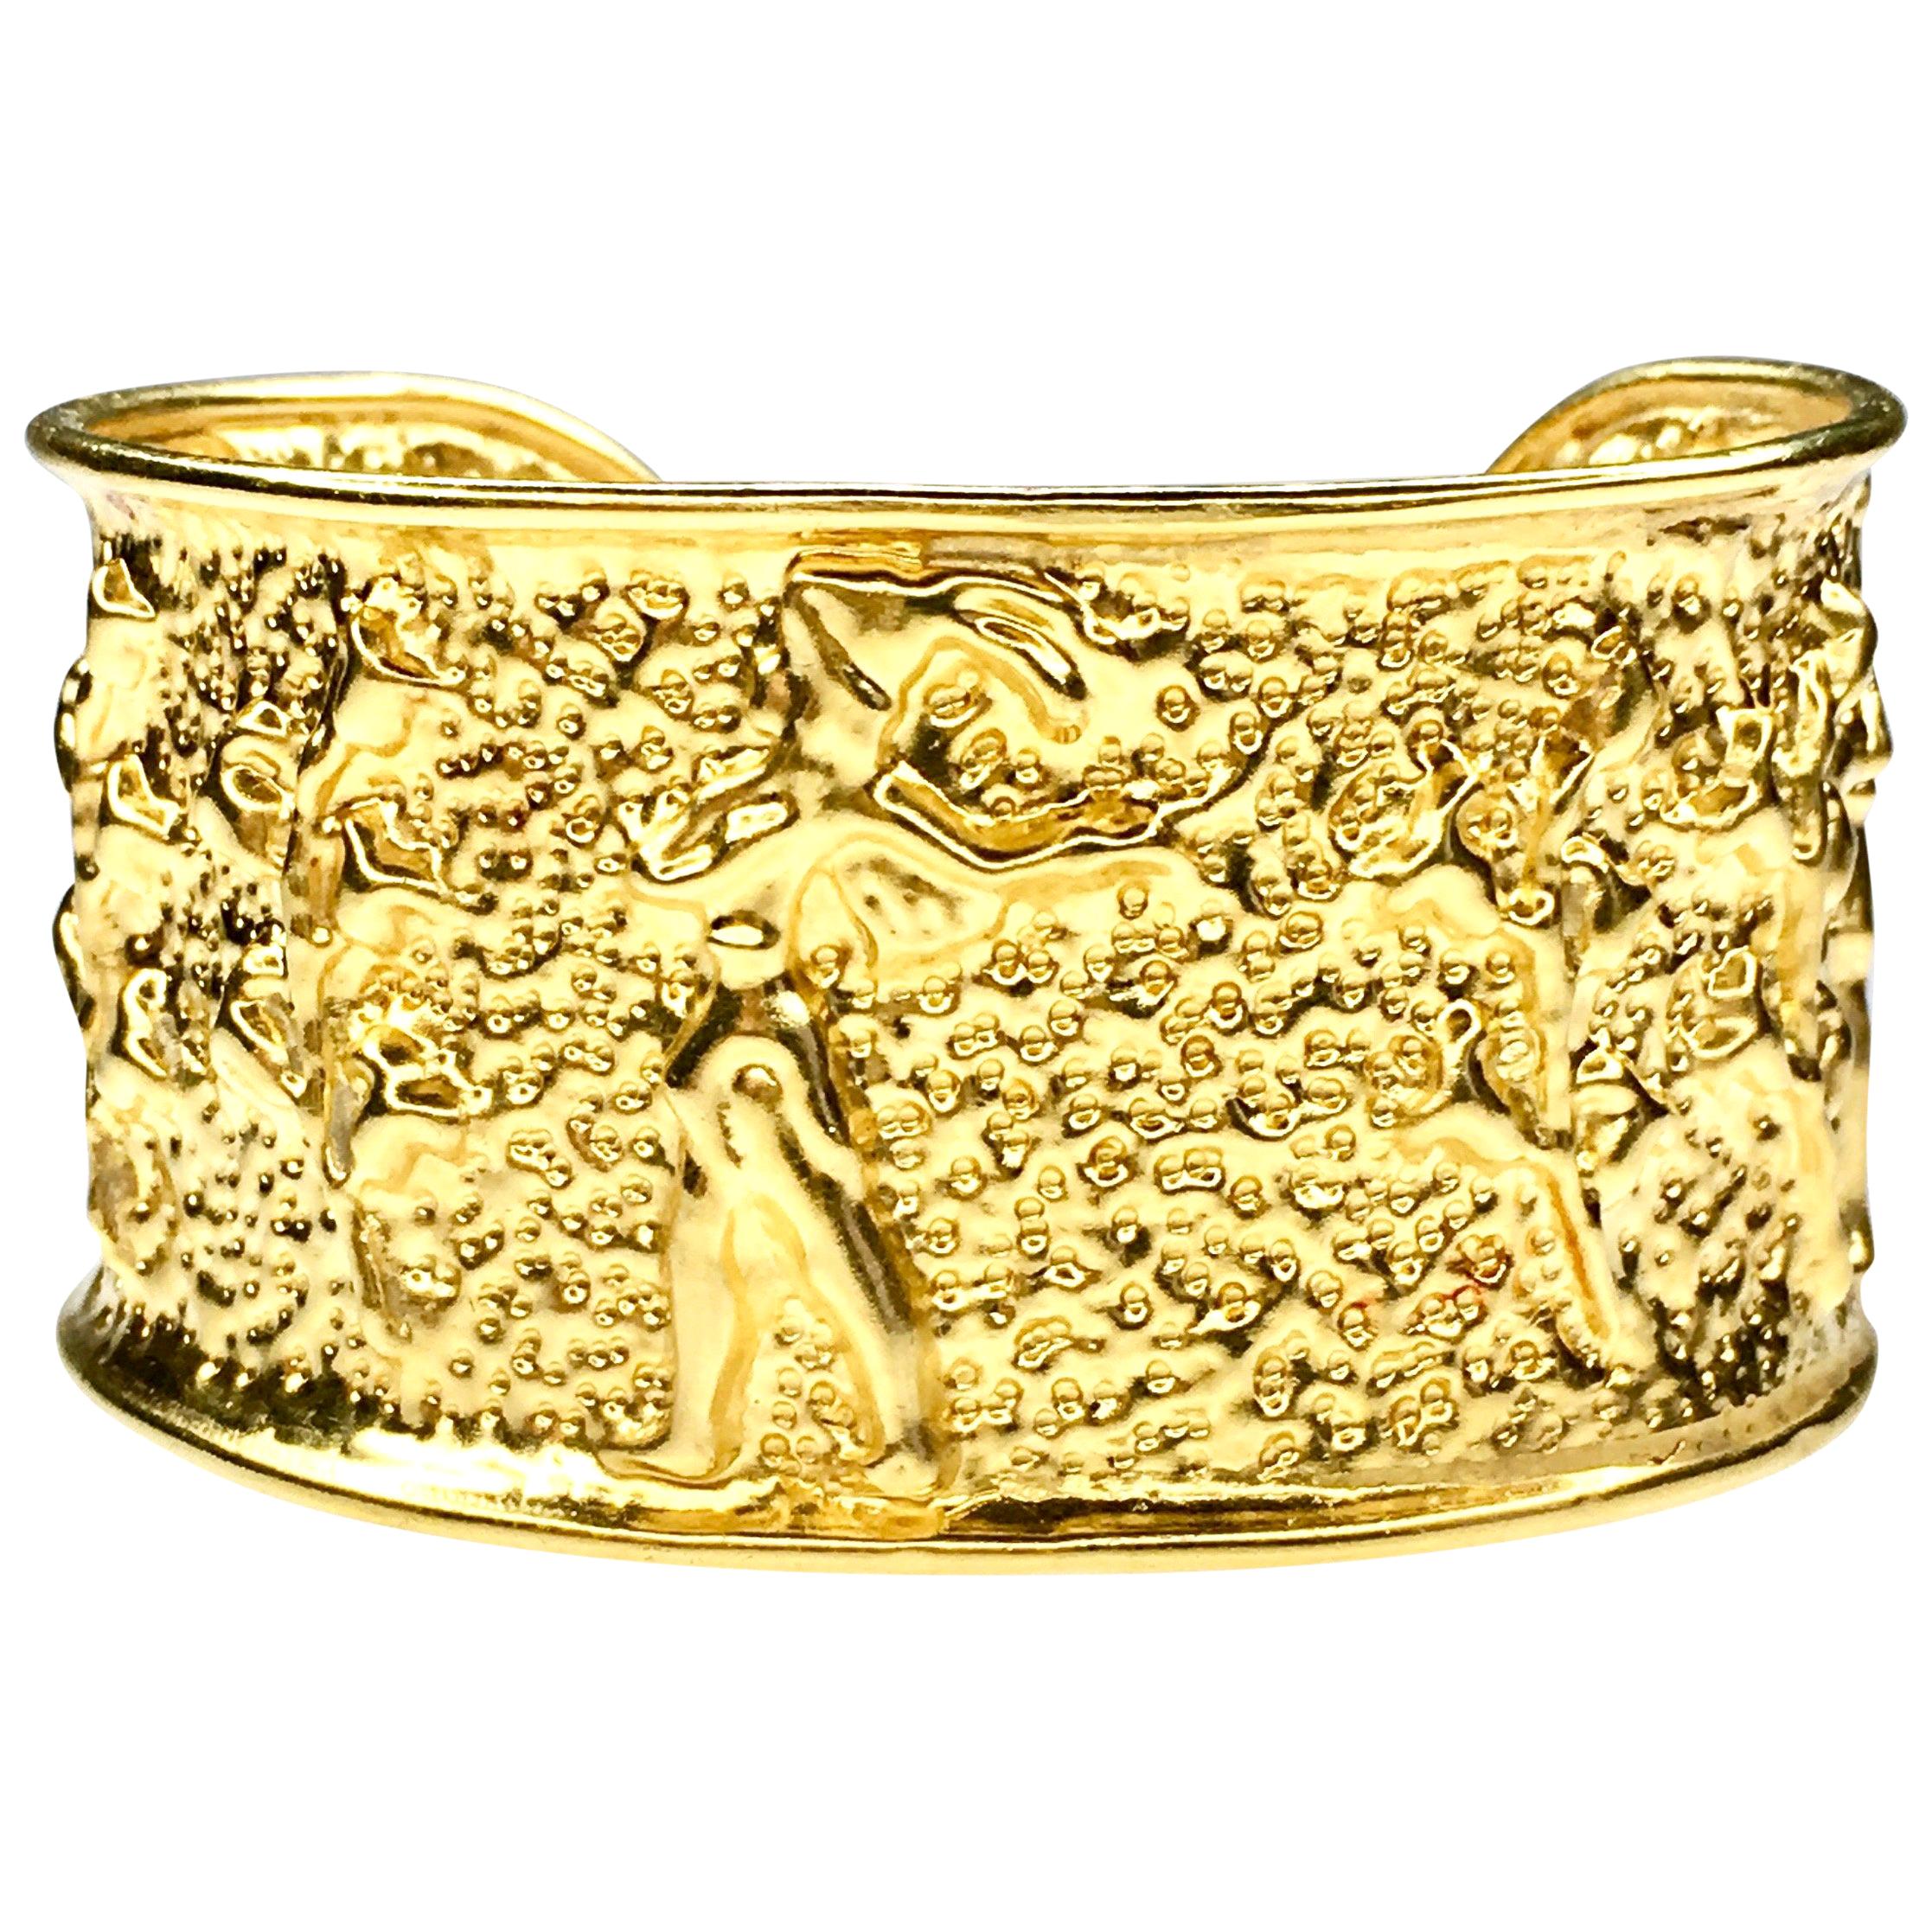 Gemolithos 22 Karat Yellow Gold The Prince of Knossos Cuff Bangle Bracelet